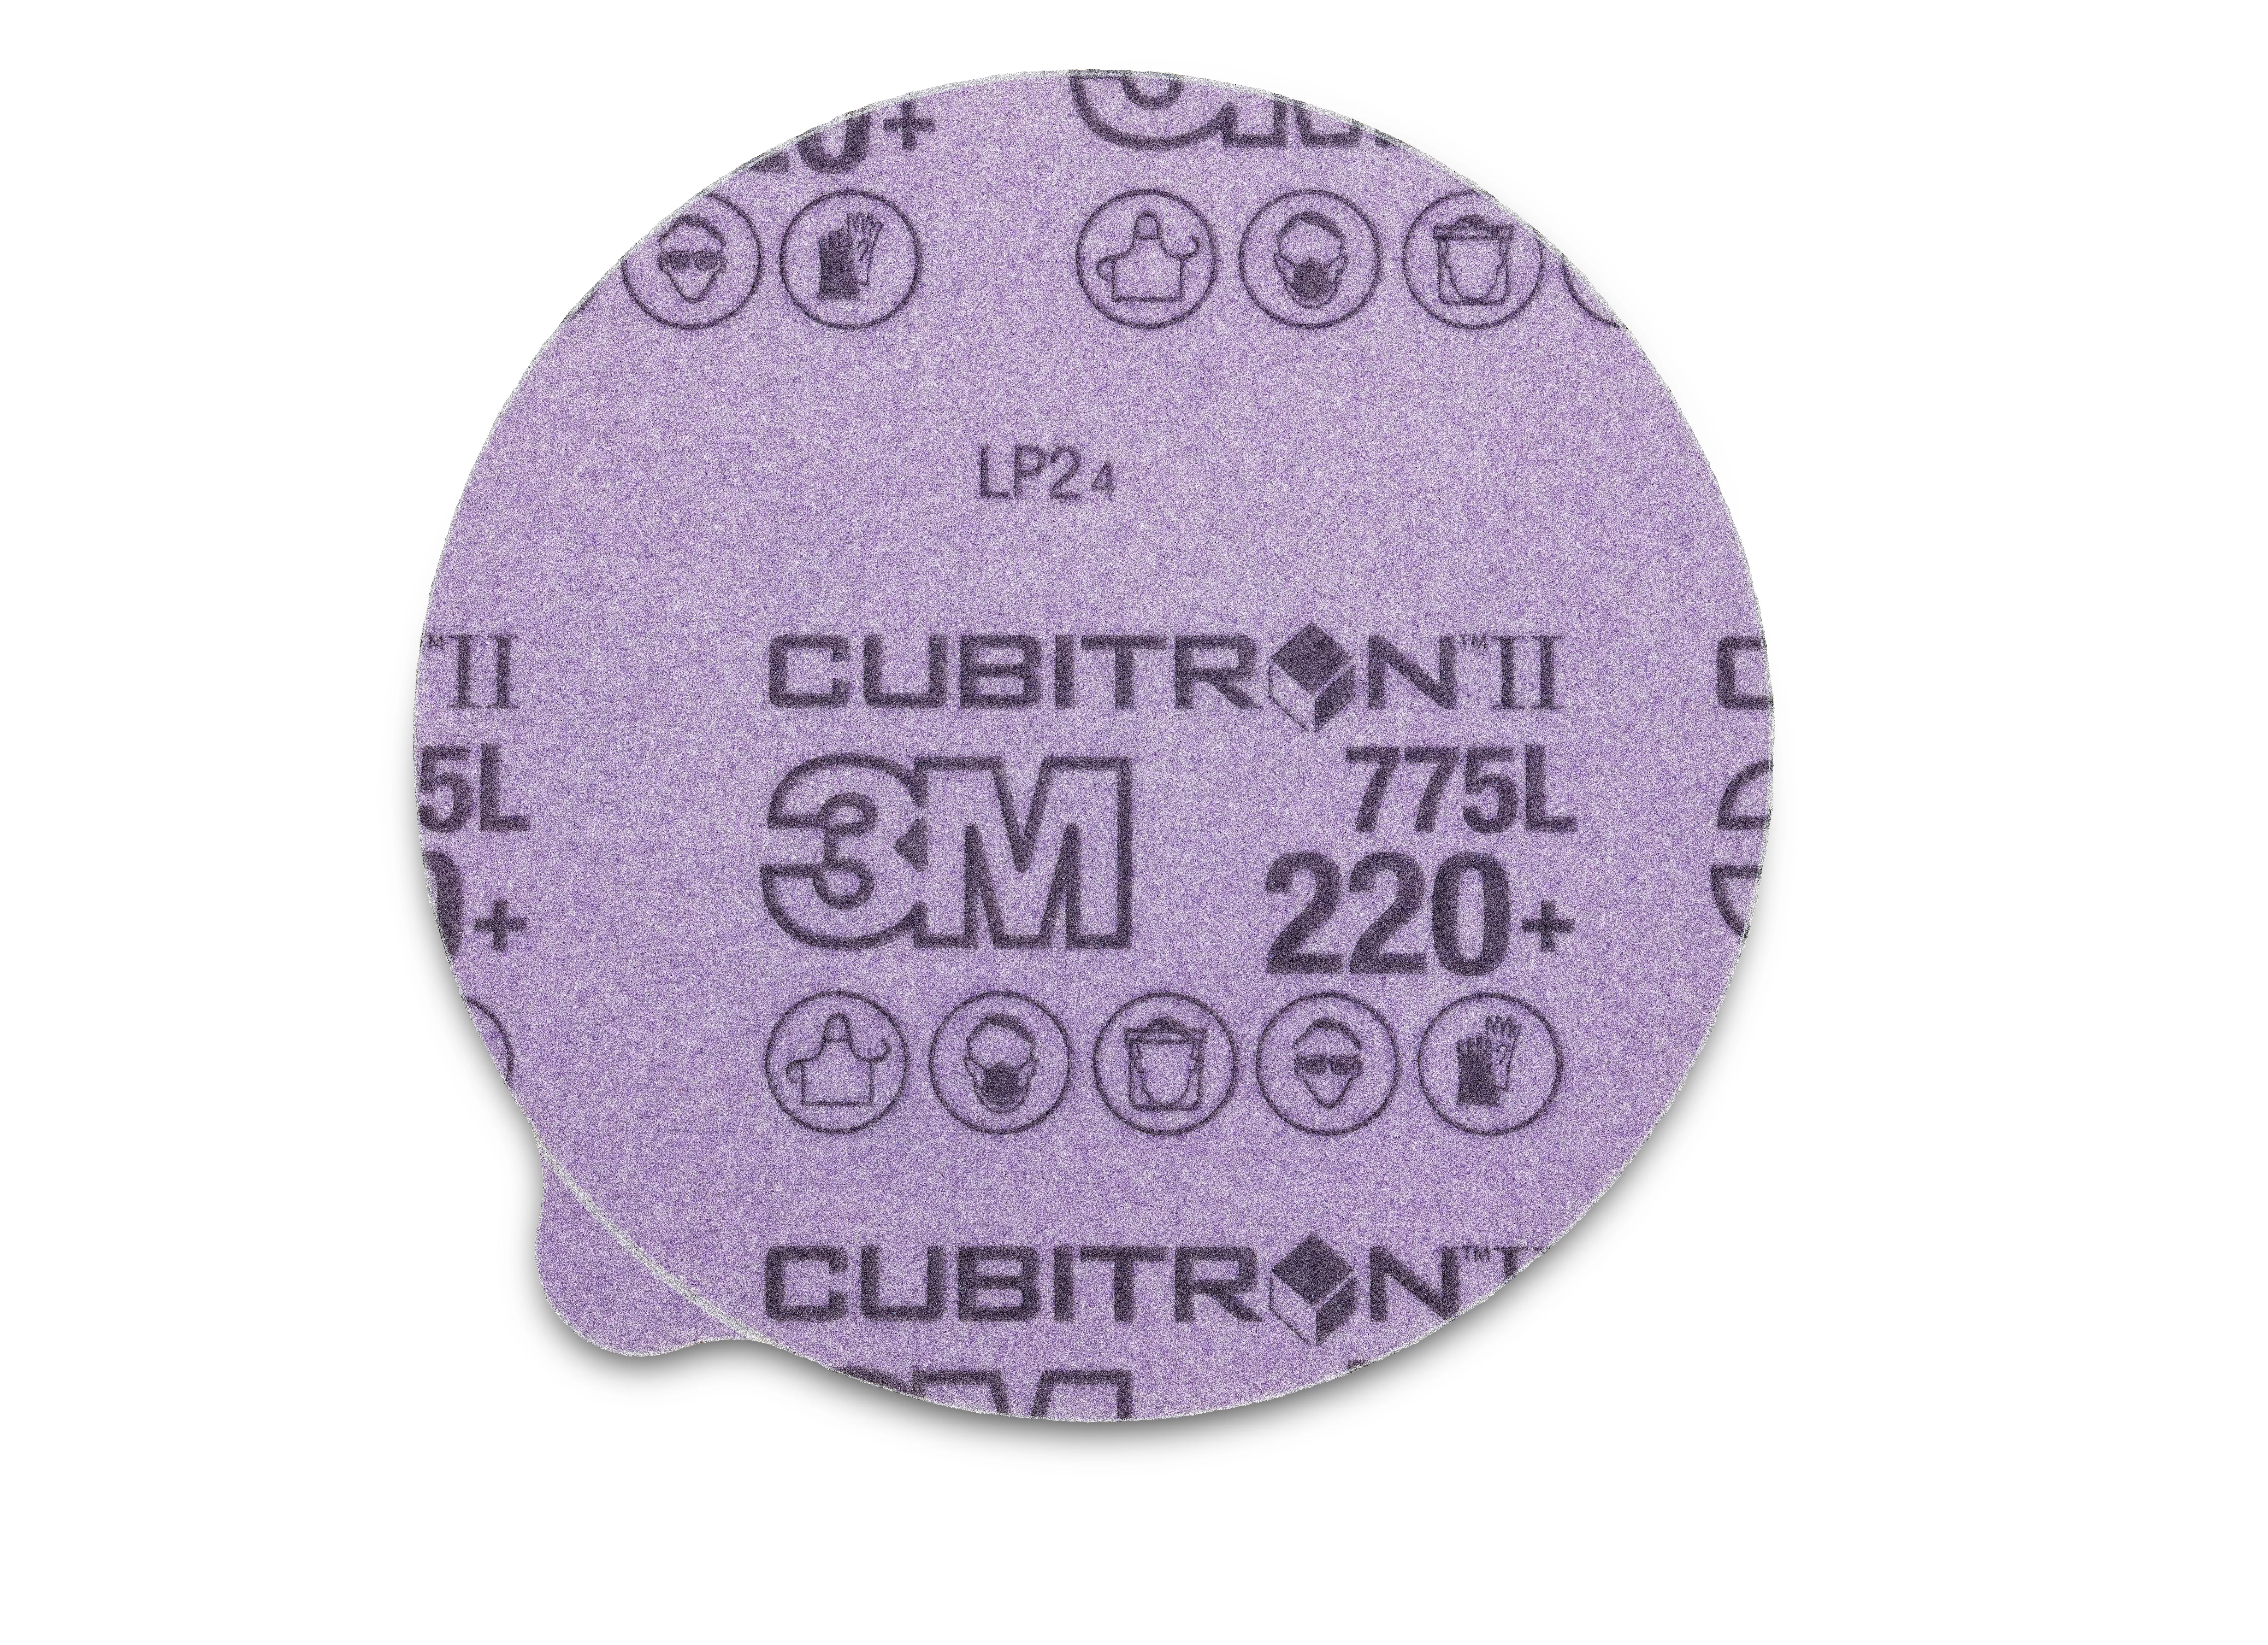 3M™ Cubitron™ II Stikit™ Film Disc 775L, 220+, 6 in x NH, Linered w/Tab,
Die 600Z, 50/Carton, 250 ea/Case